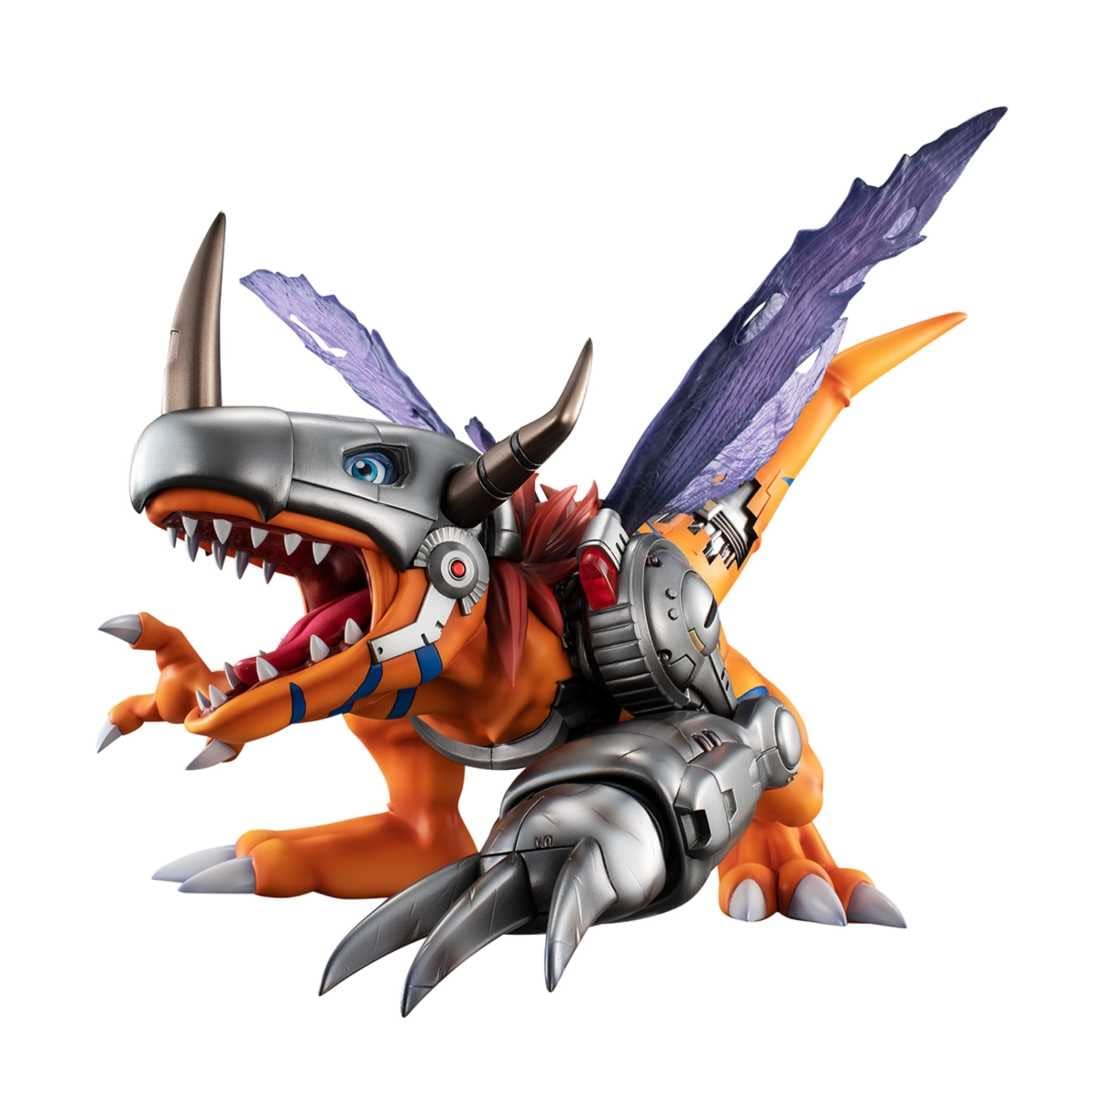 "Digimon" Returns with MetalGreymon Statue from Megahouse